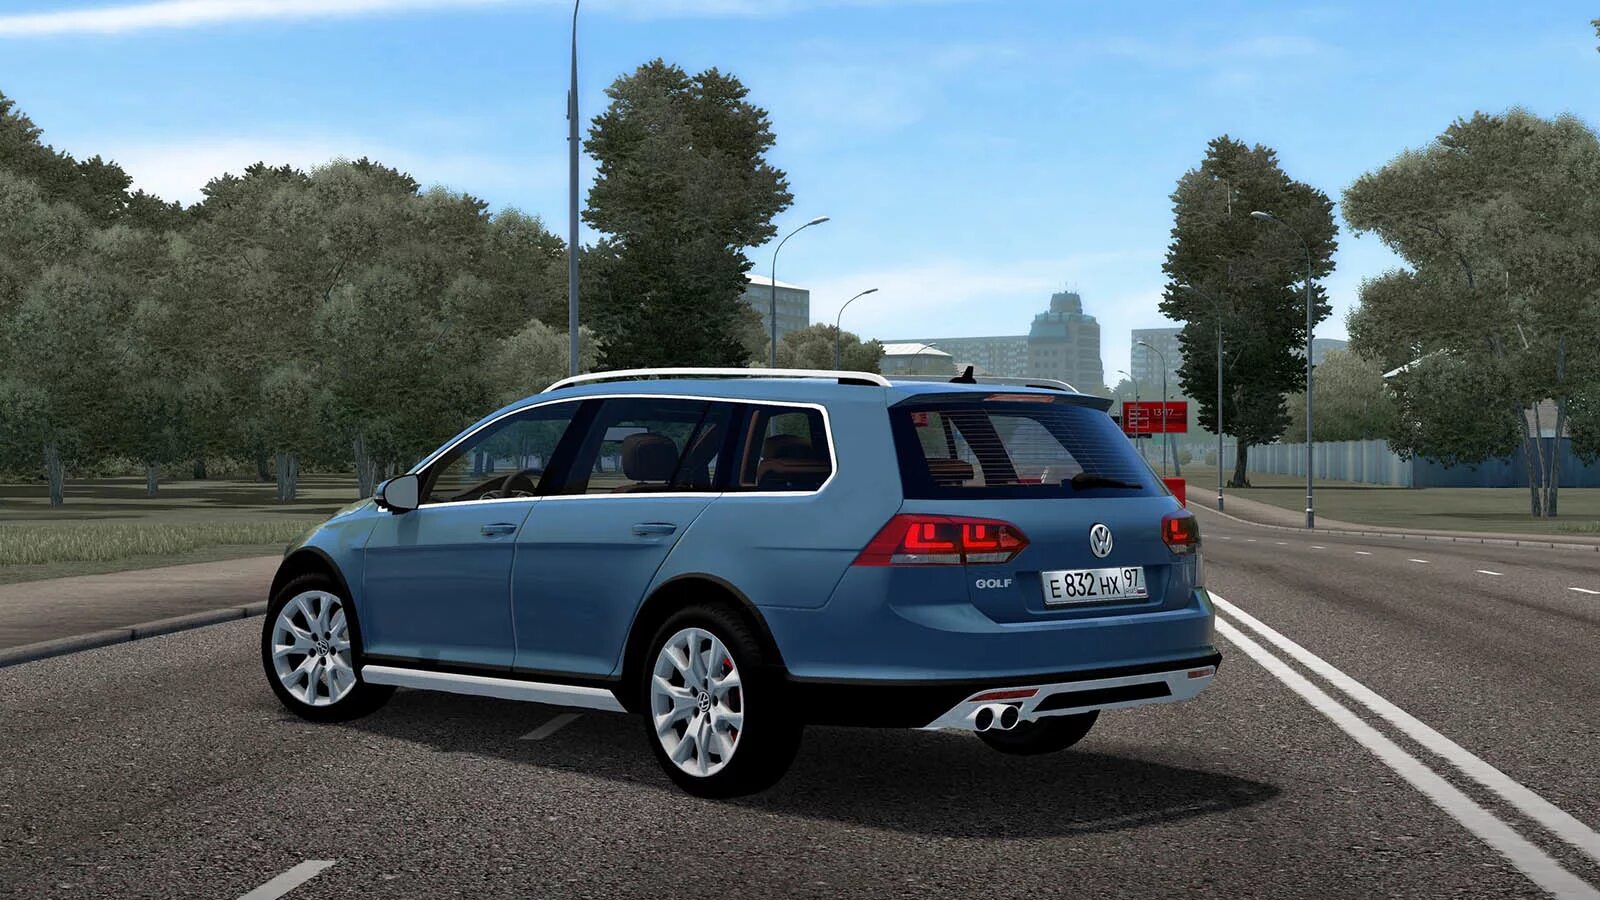 Фольксваген для City car Driving 1.5.9. Volkswagen 2020 City car Driving. Сити кар драйвинг Фольксваген гольф 2015. Golf variant City car Driving. Моды на сити кар драйвинг фольксваген